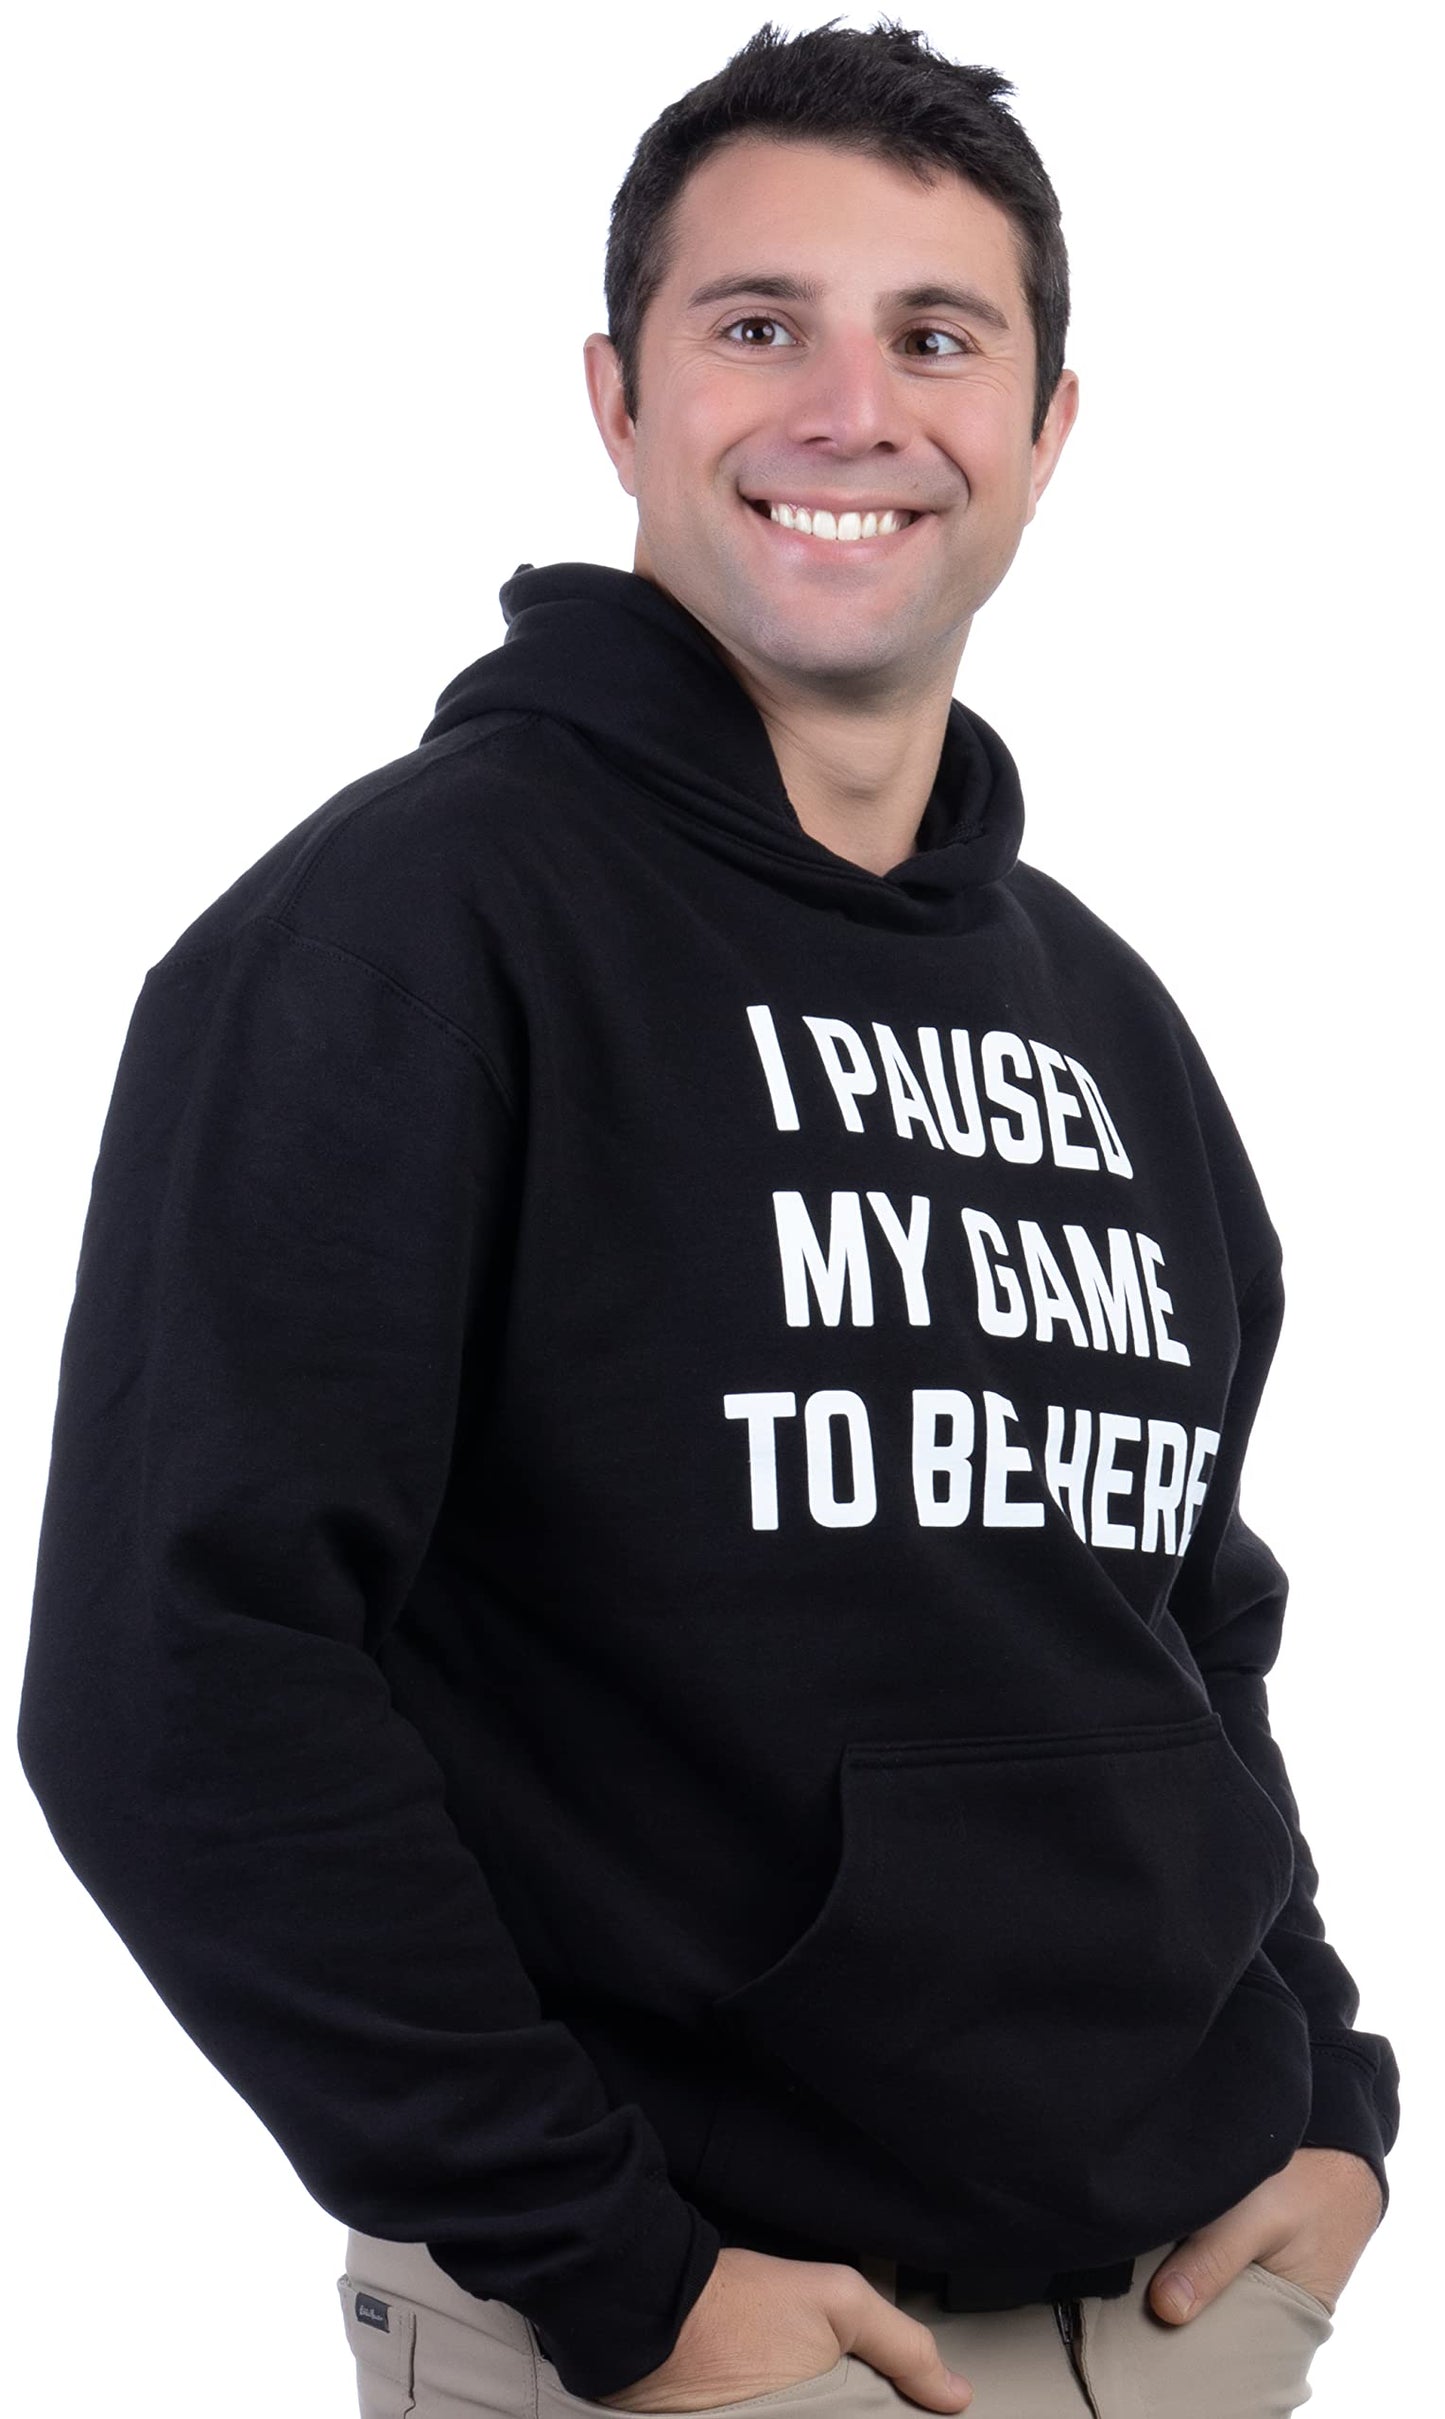 Ann Arbor T-shirt Co. I Paused my Game to Be Here | Funny Video Gamer Gaming Player Humor Joke for Men Women Hooded Sweatshirt Hoody - (Hoodie,XL) - amzGamess